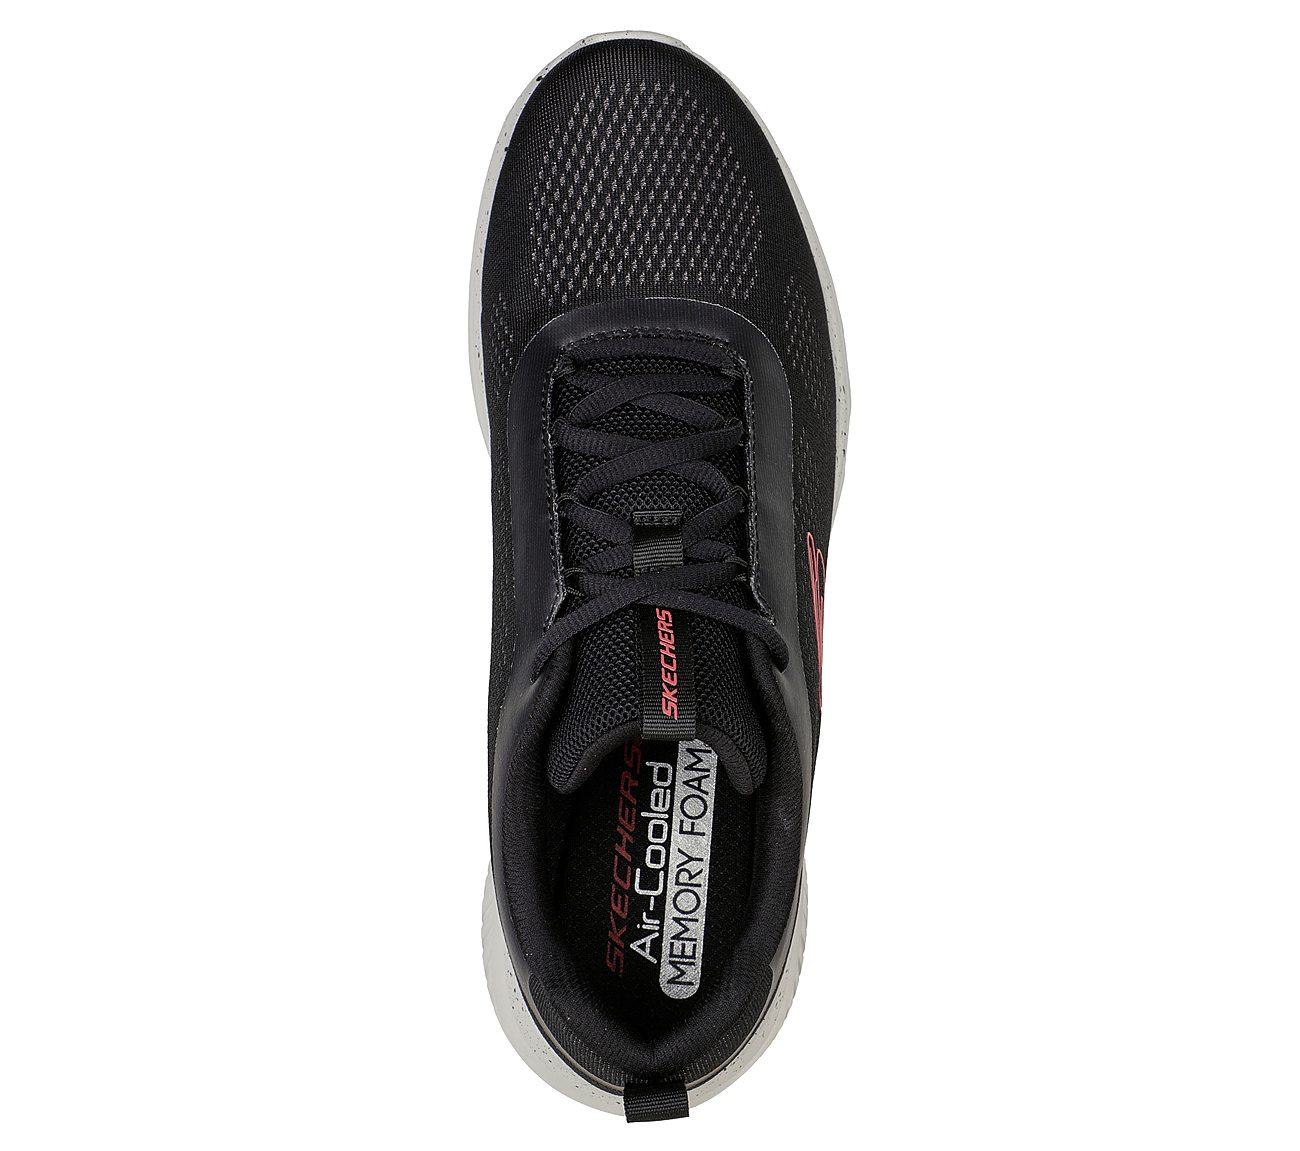 ULTRA FLEX 3, BLACK/RED Footwear Top View